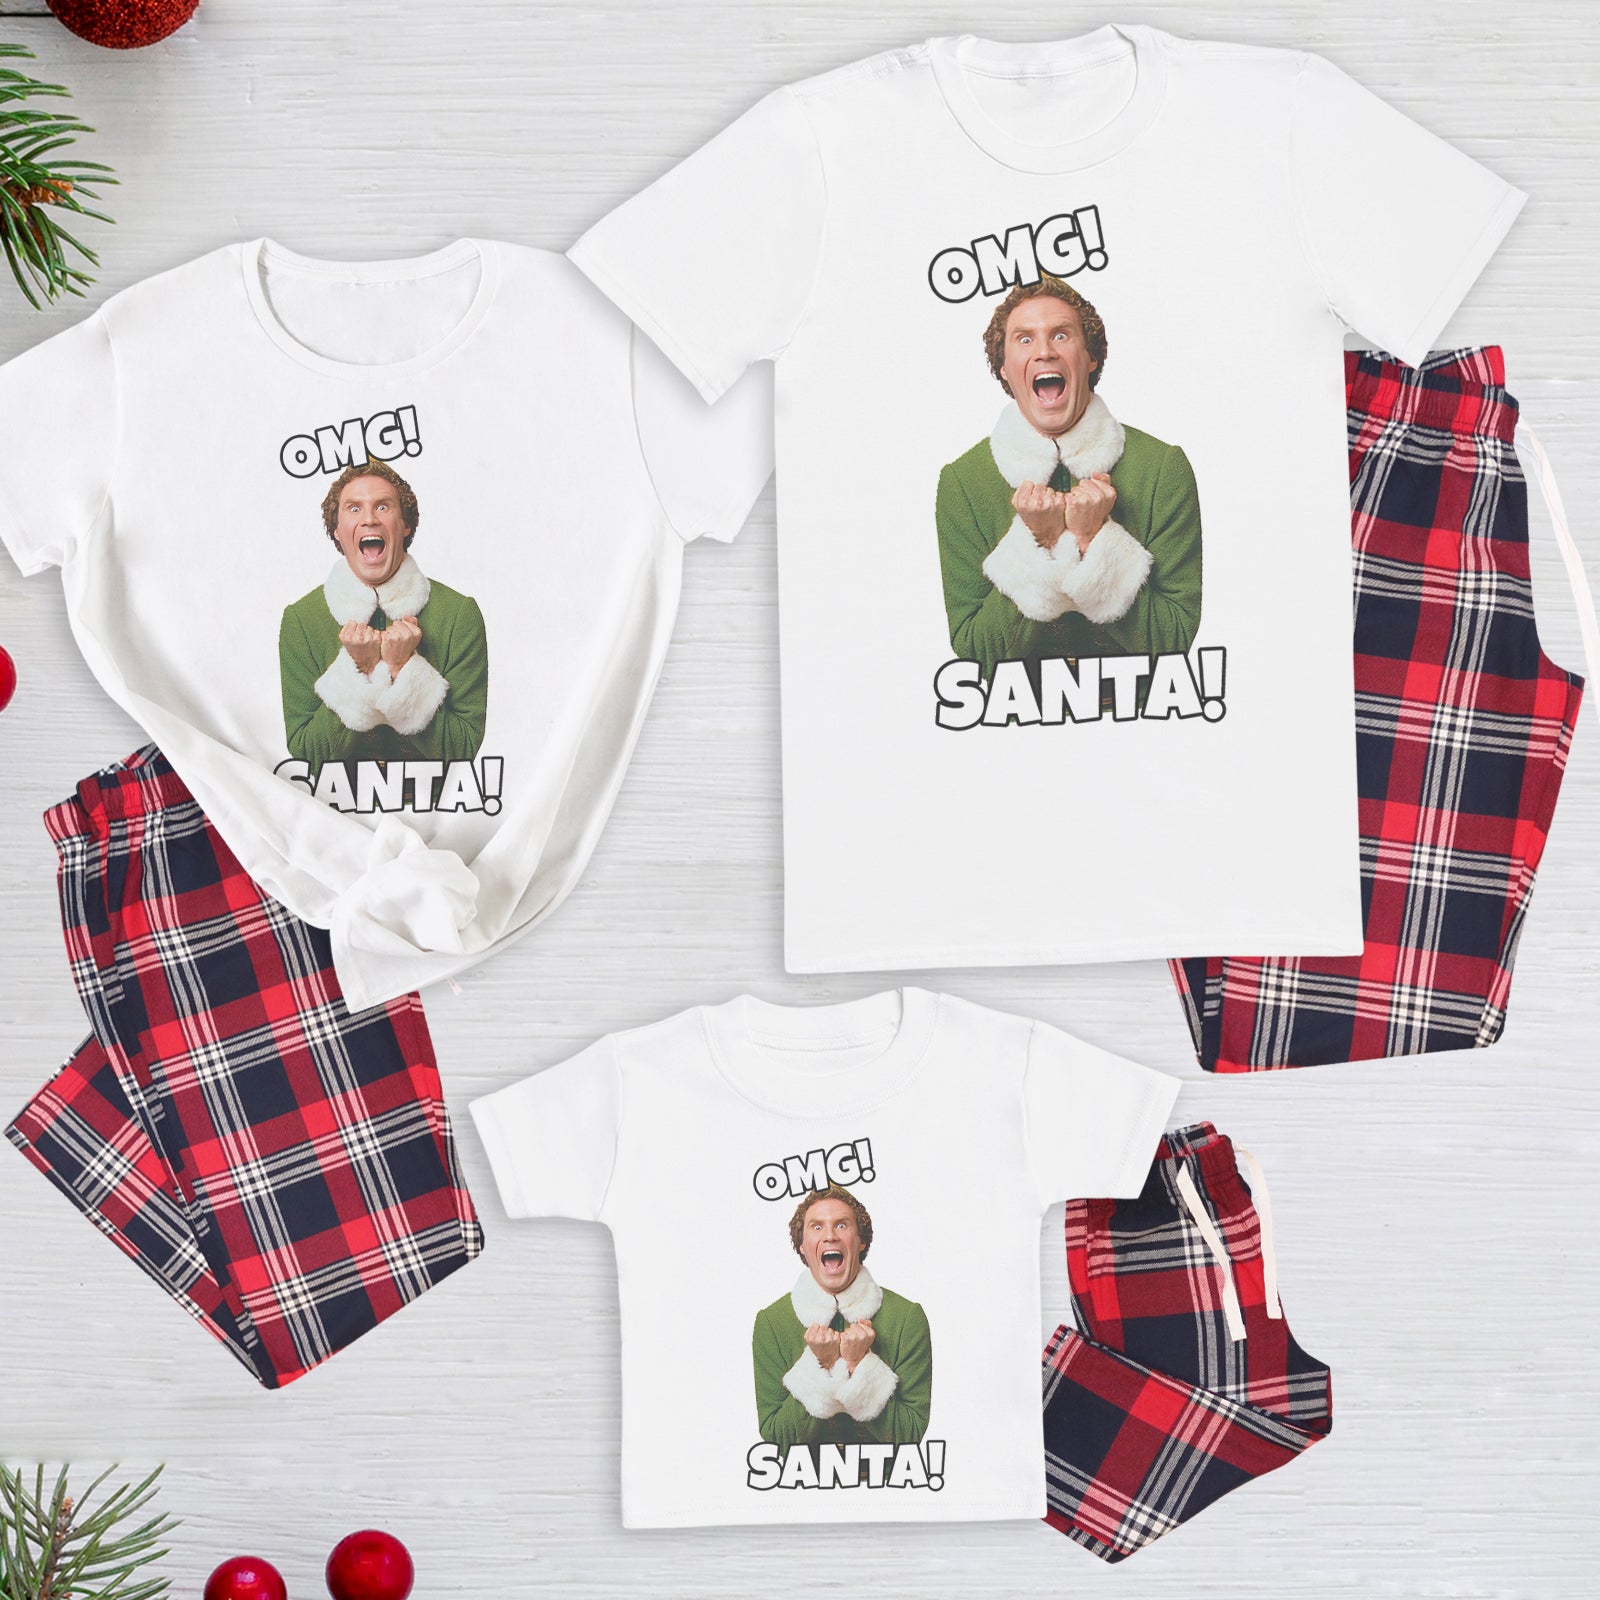 OMG Santa - Family Matching Christmas Pyjamas - Top & Tartan PJ Bottoms - (Sold Separately)